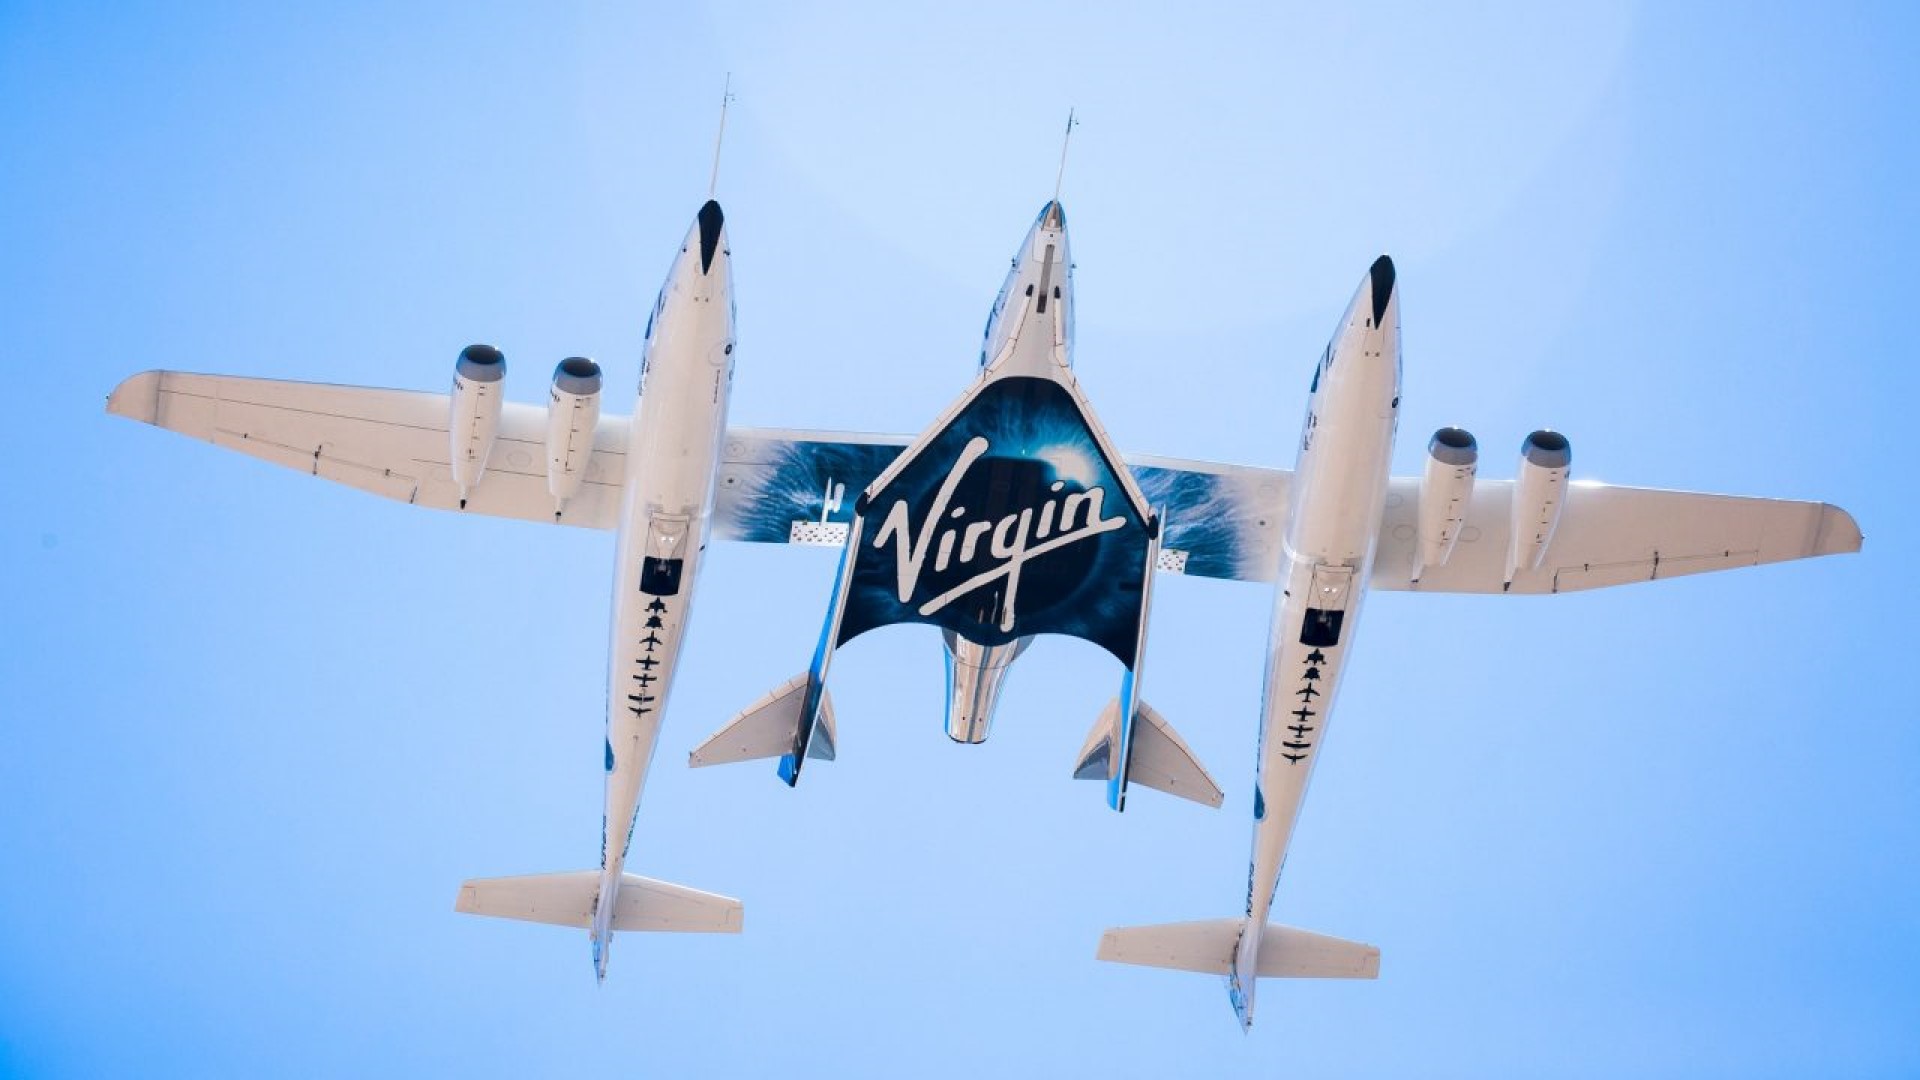 Virgin Galactic ยืนยันจะบินทดสอบ VSS Unity ที่ขับเคลื่อนด้วยจรวดใน 22 พ.ค. นี้